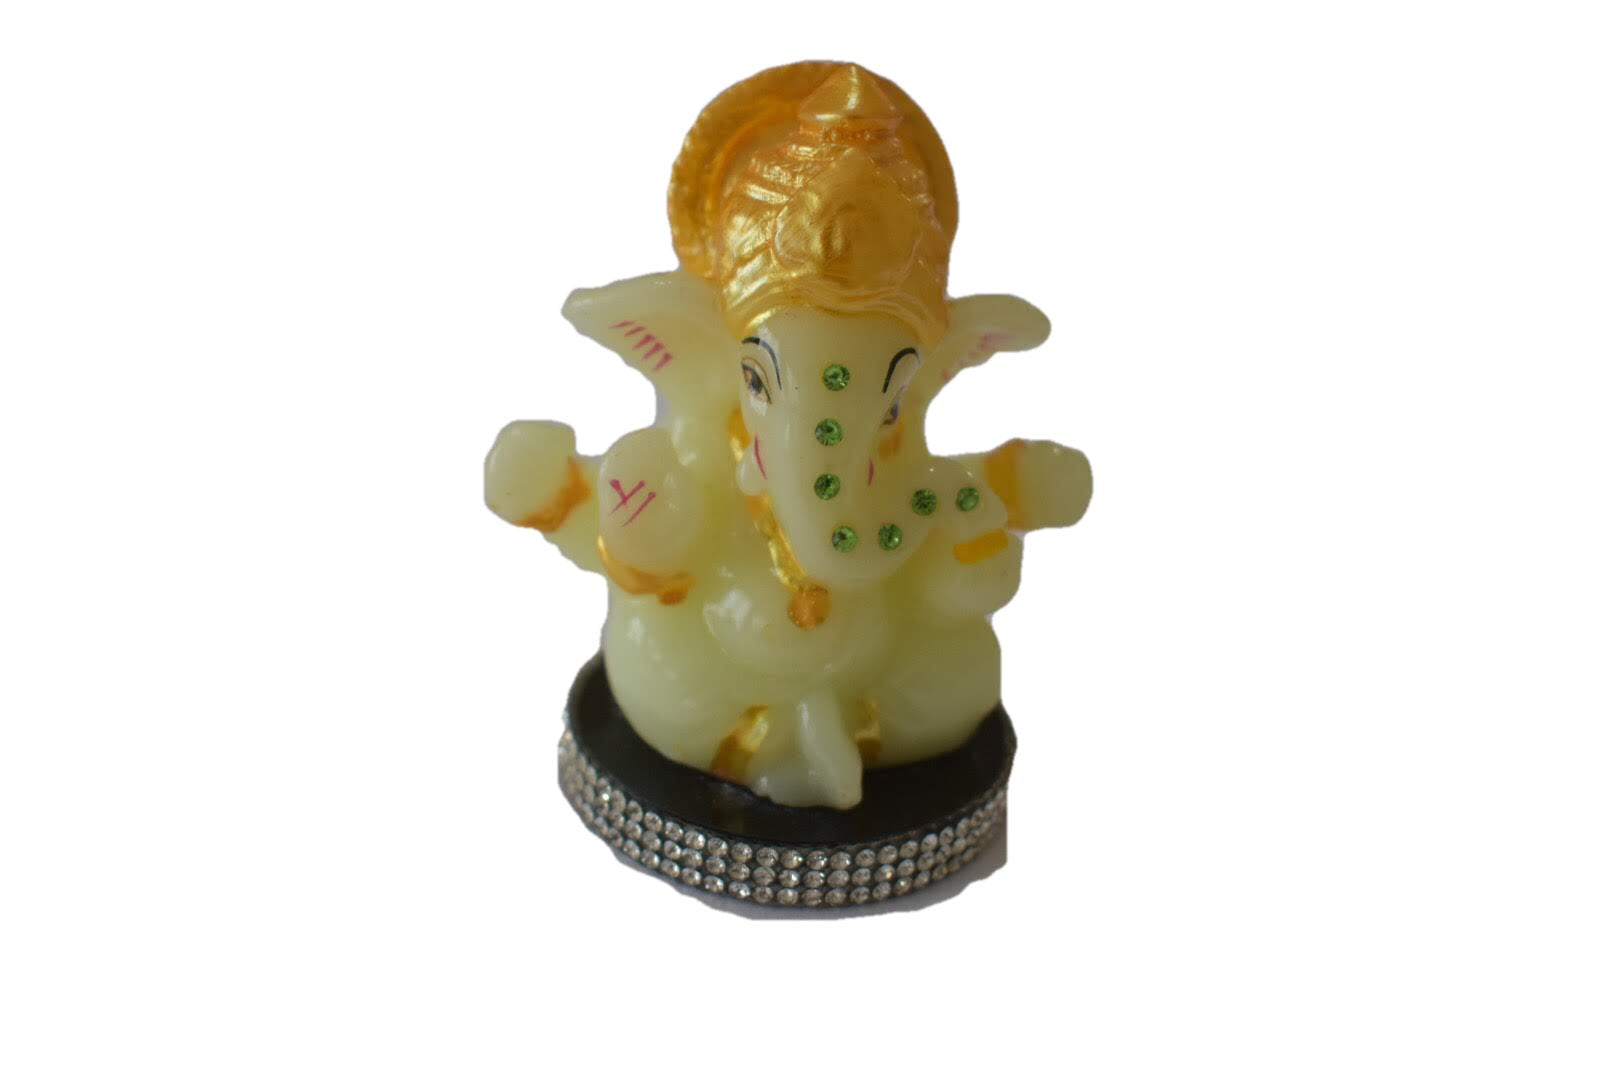 Light Green Color - Lord Ganesha Figurine with Jewel studded platform - Porcelain Fibre Glass - Home Decor